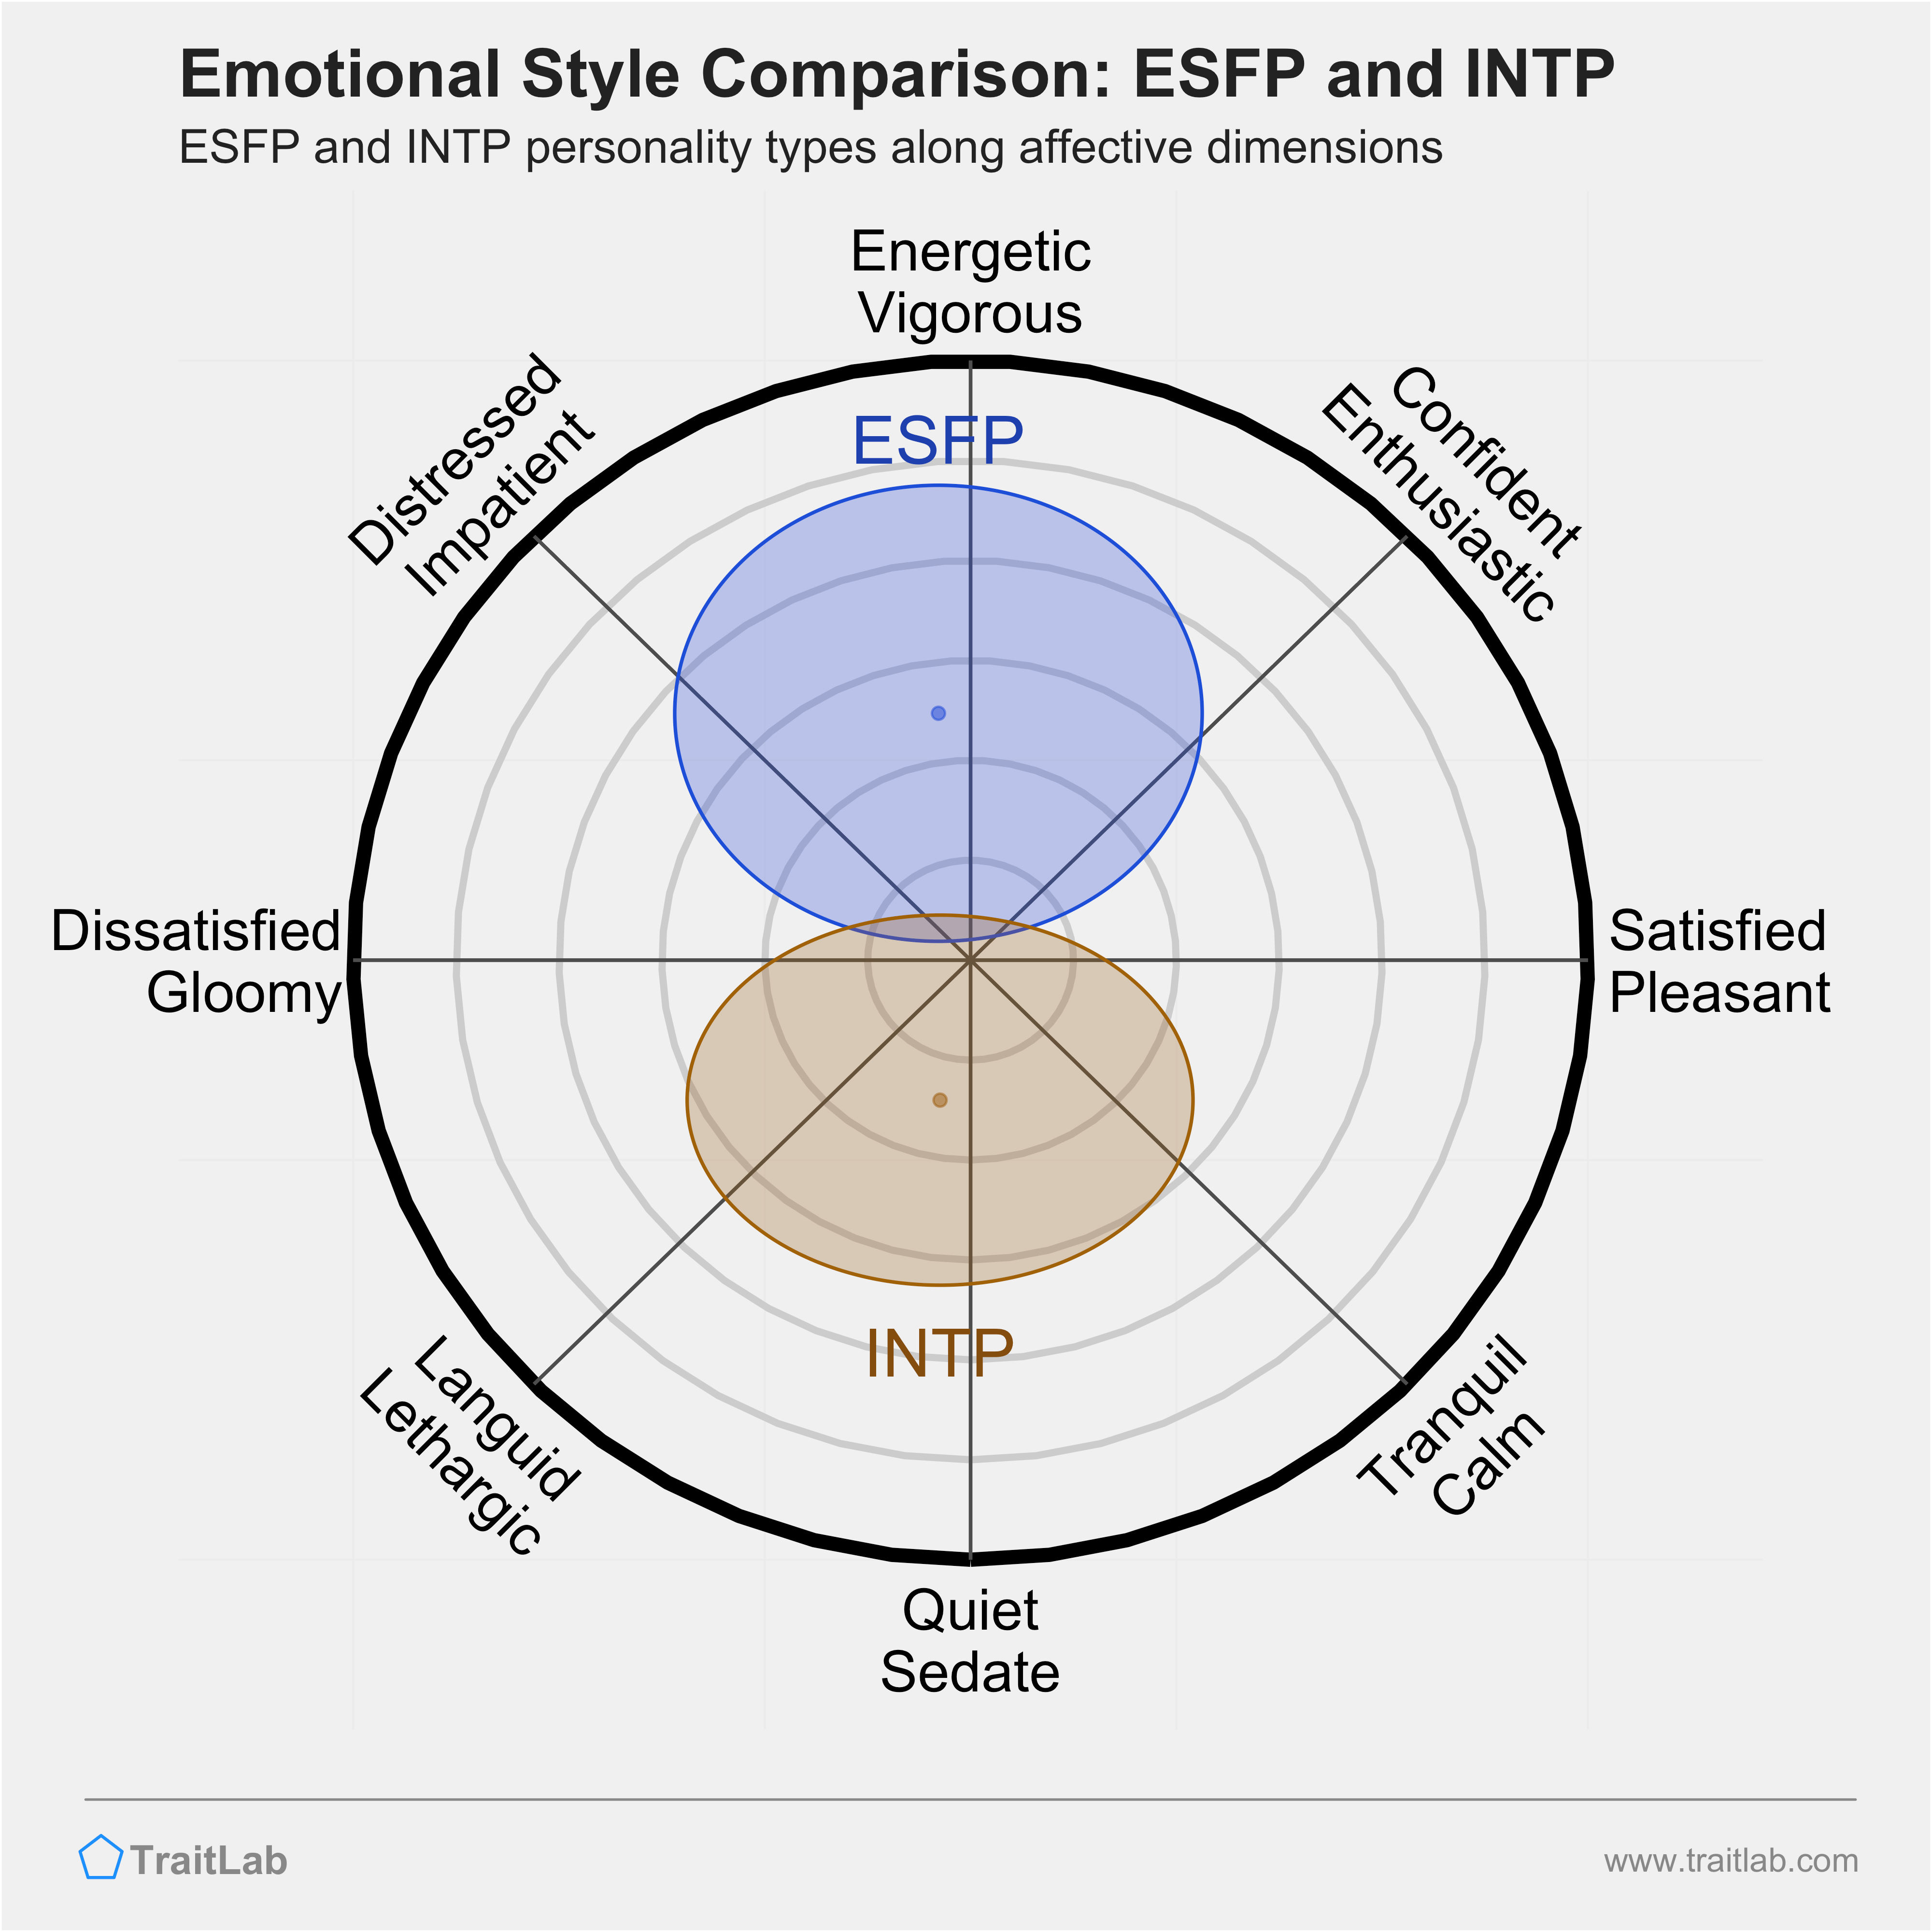 ESFP and INTP comparison across emotional (affective) dimensions